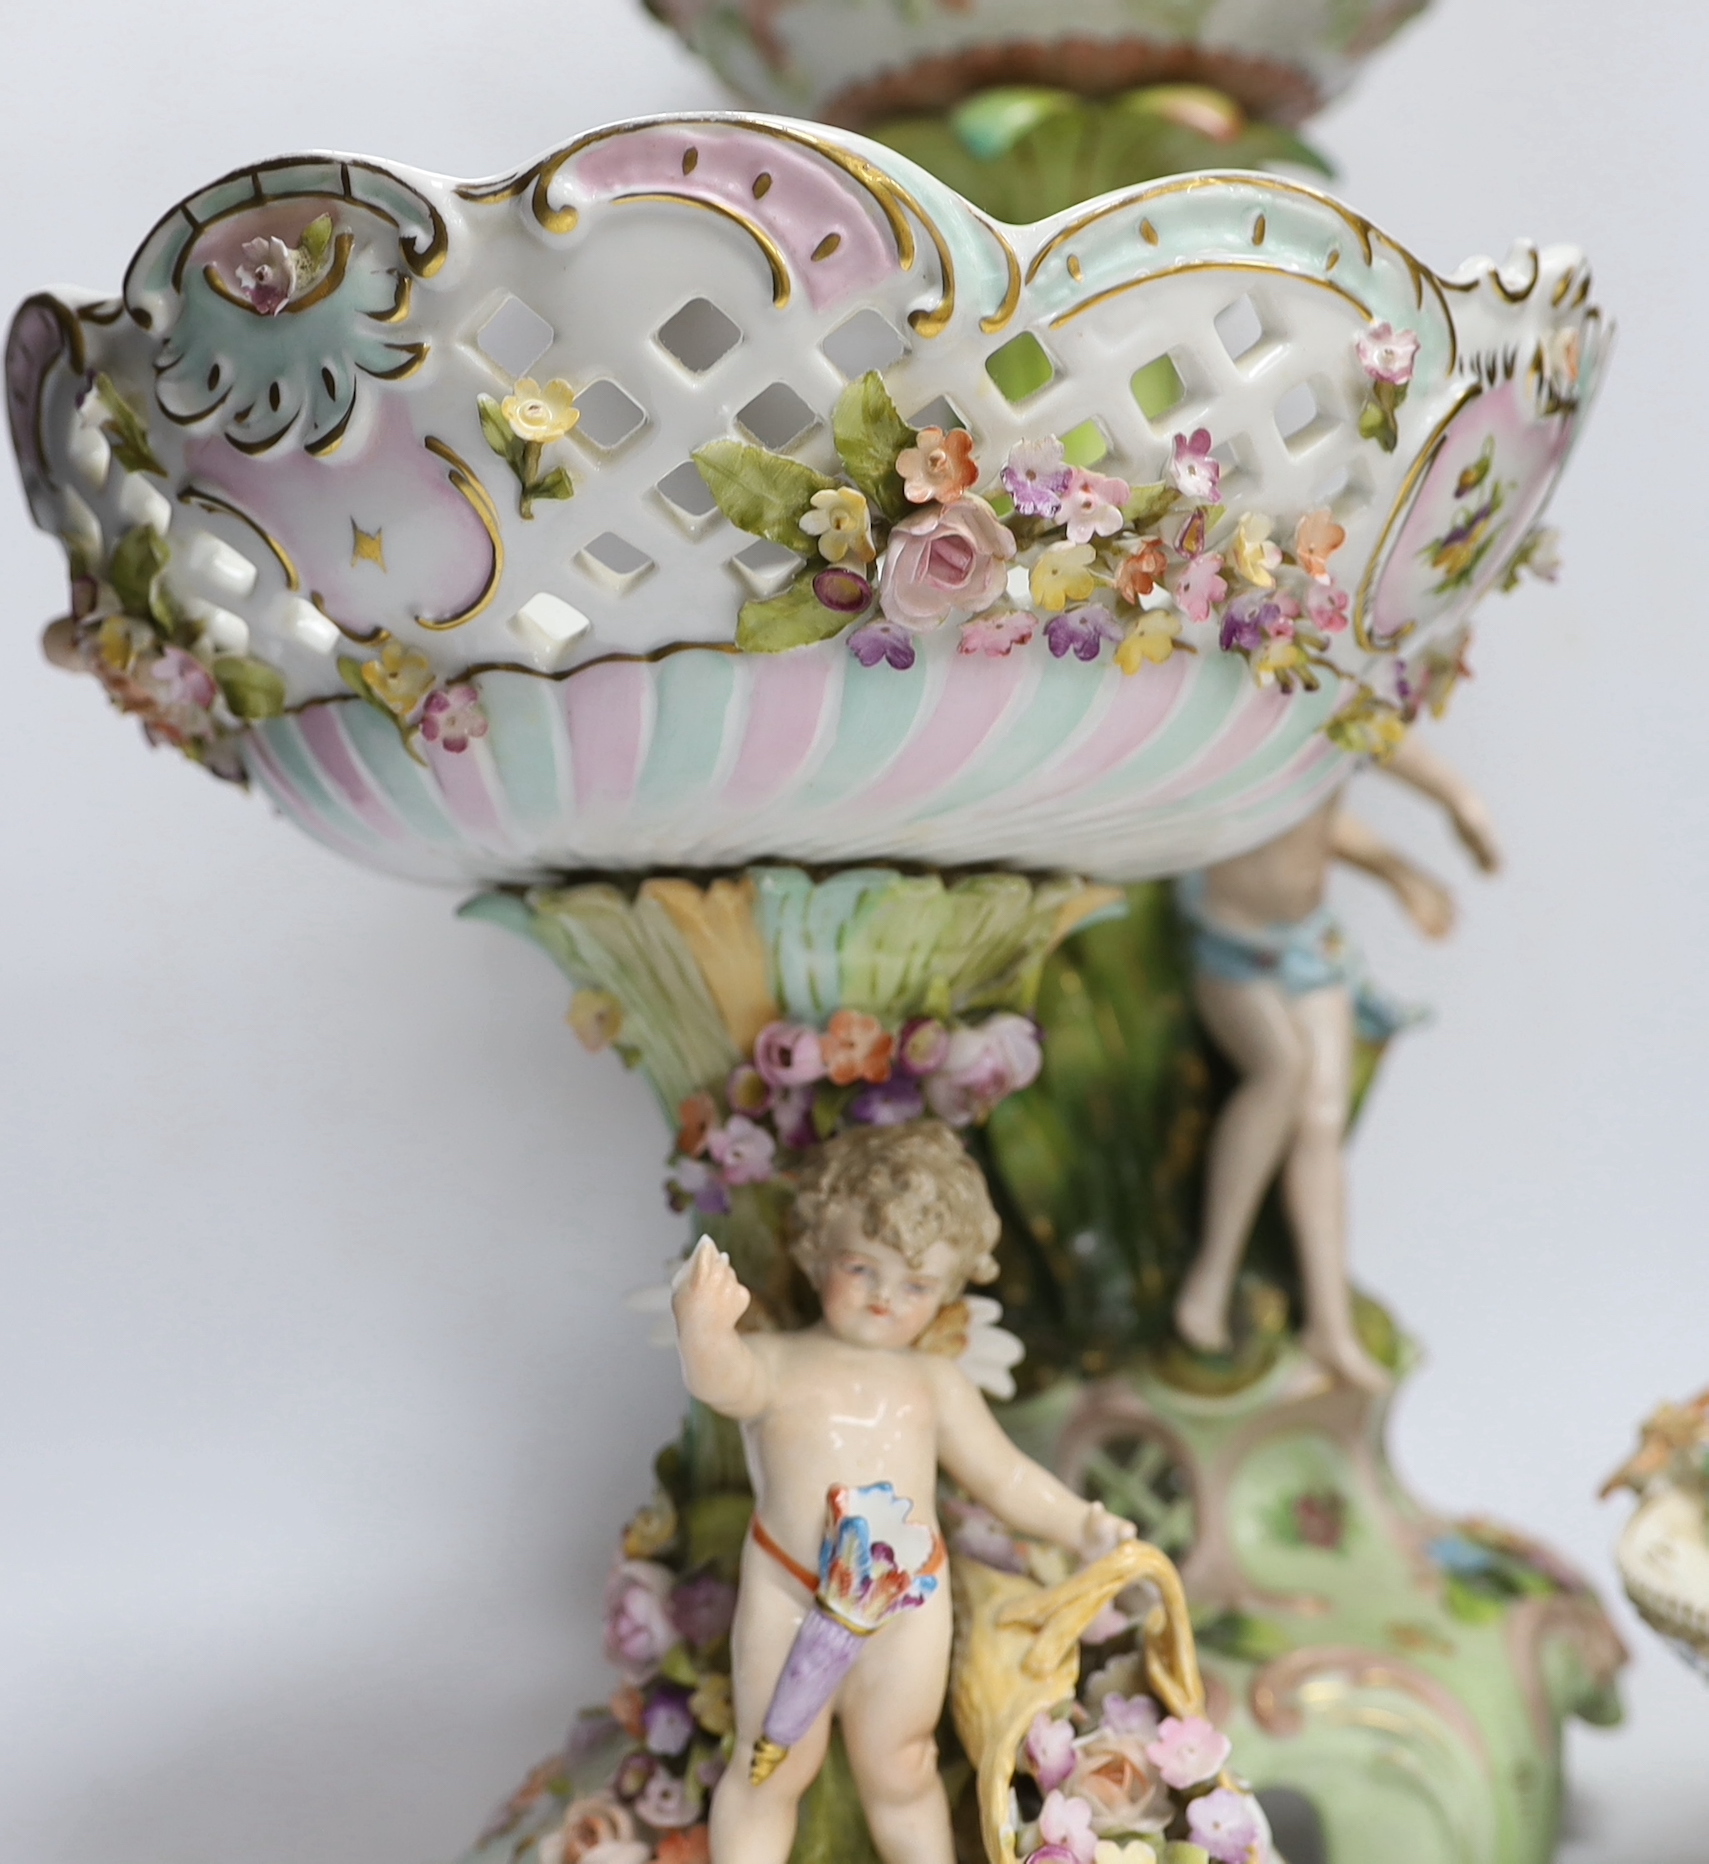 A Sitzendorf figural centrepiece, a smaller similar centrepiece and an English porcelain basket, tallest 54cm